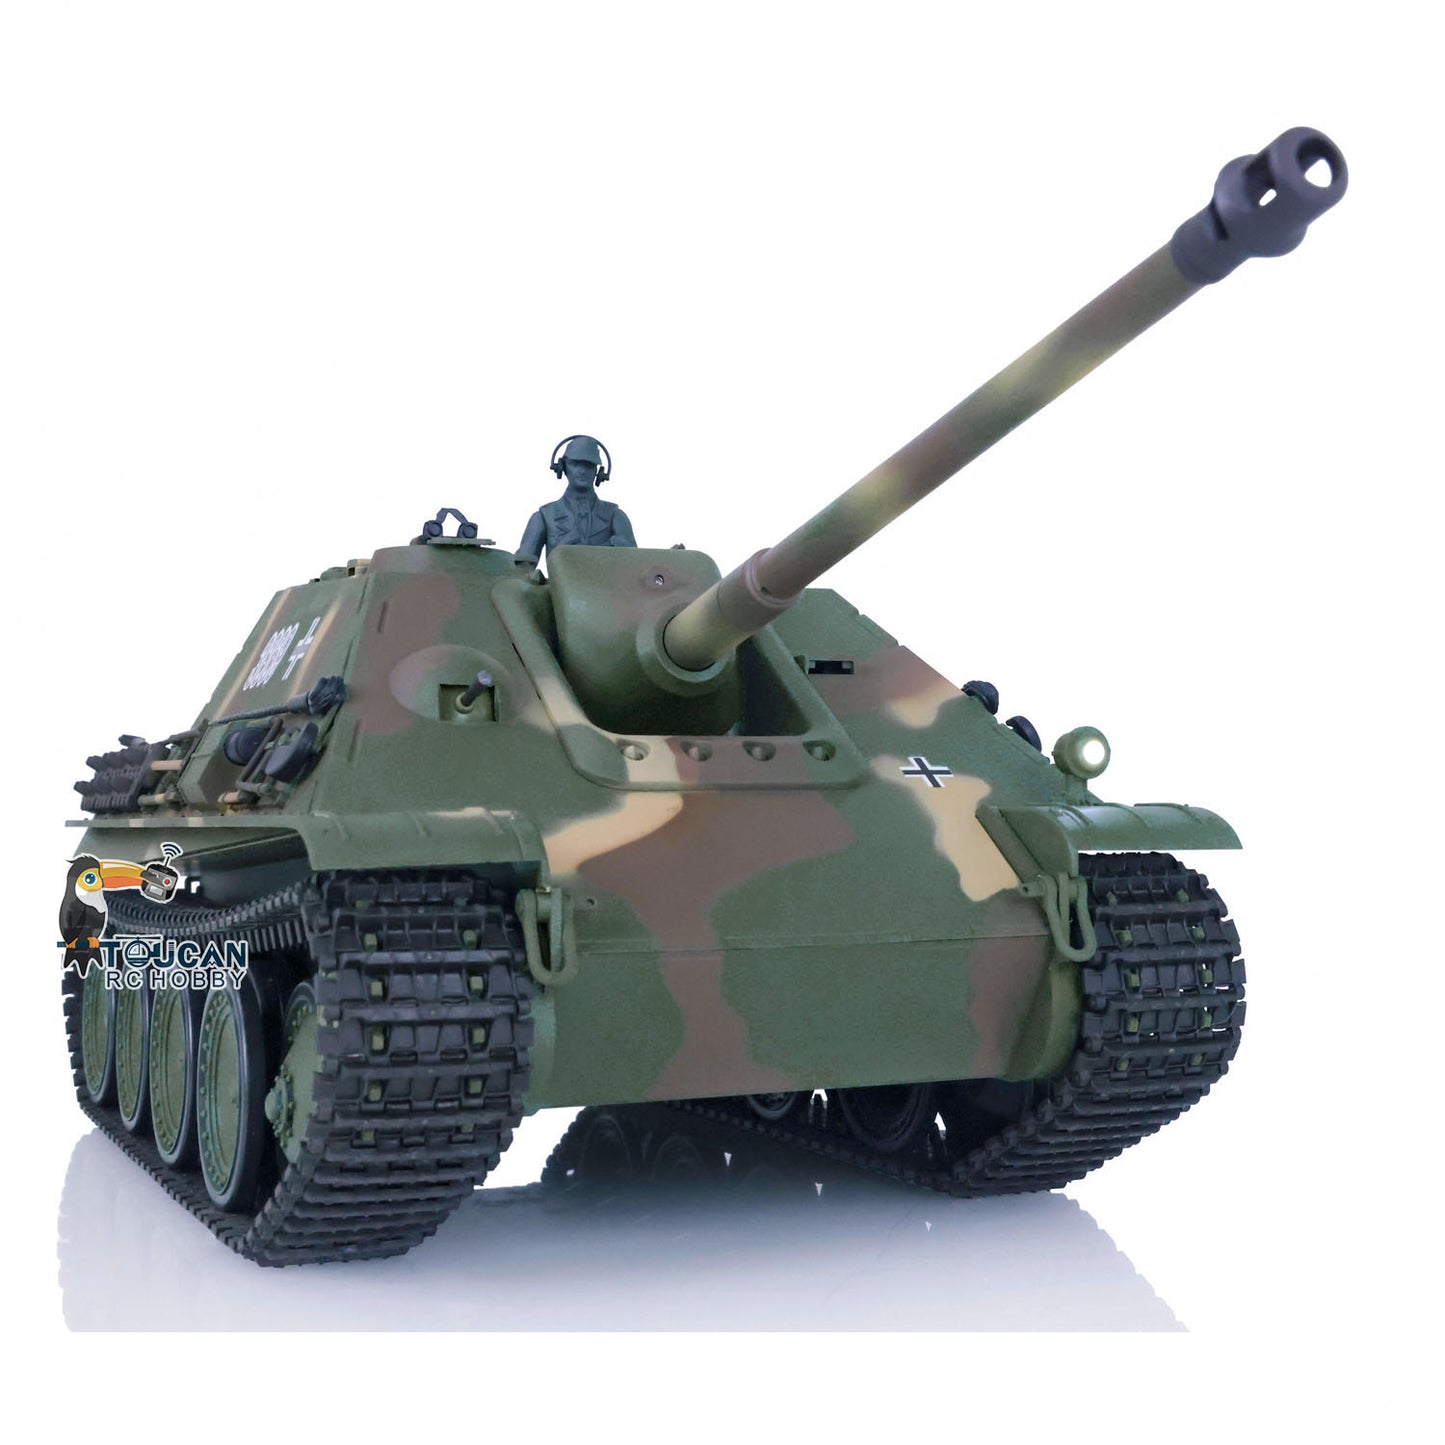 US Warehouse 2.4Ghz Heng Long 1/16 Scale 7.0 Plastic Ver German Jadpanther RC Tank Smoke BB Shooting IR Sound RTR Model 3869